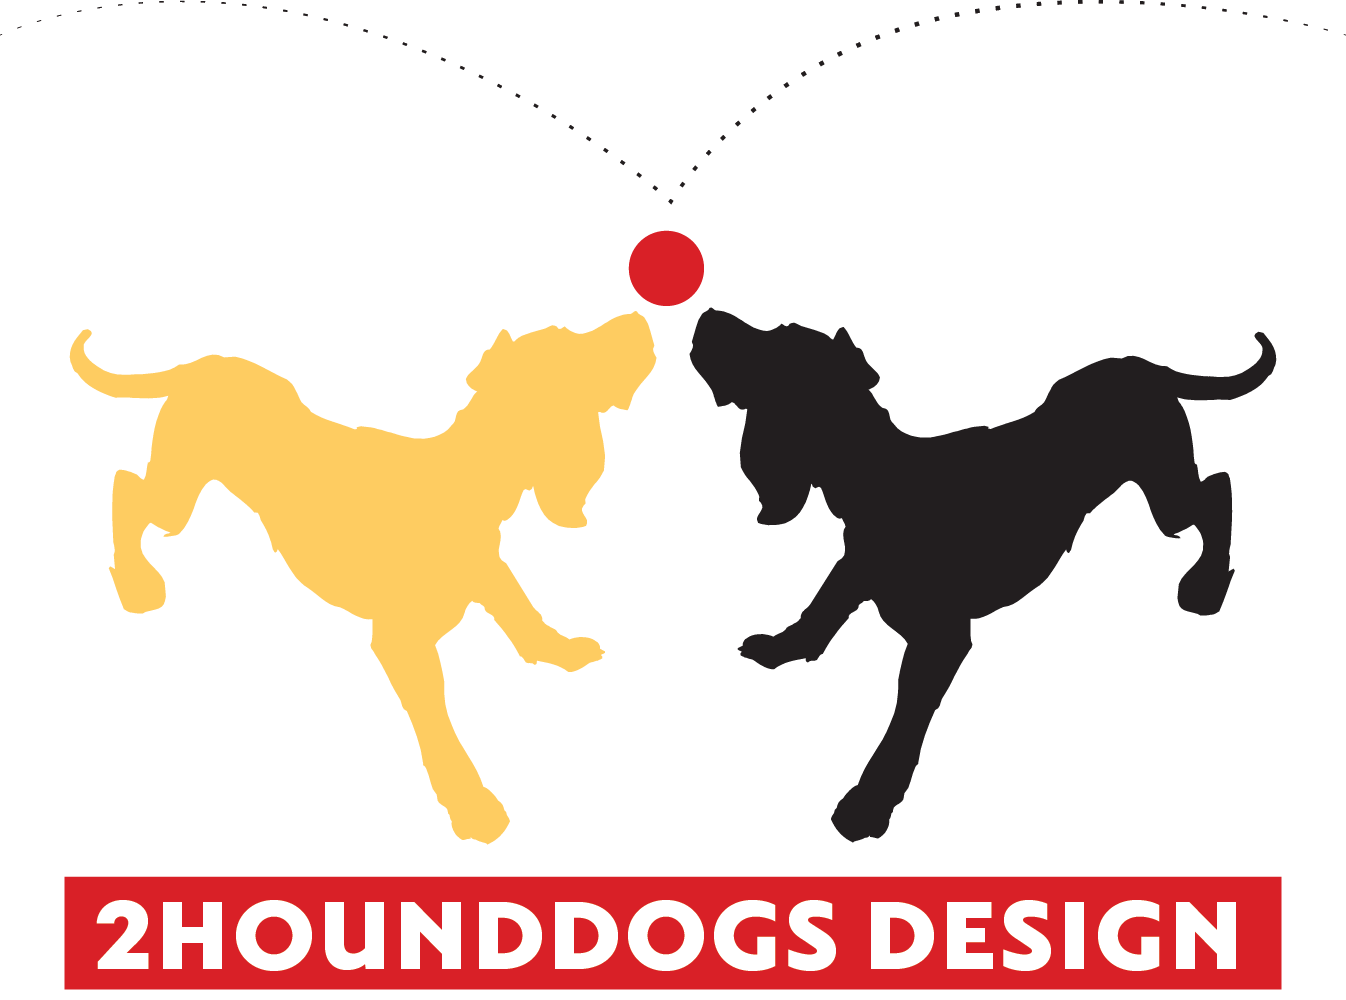 2hounddogs Design, LLC